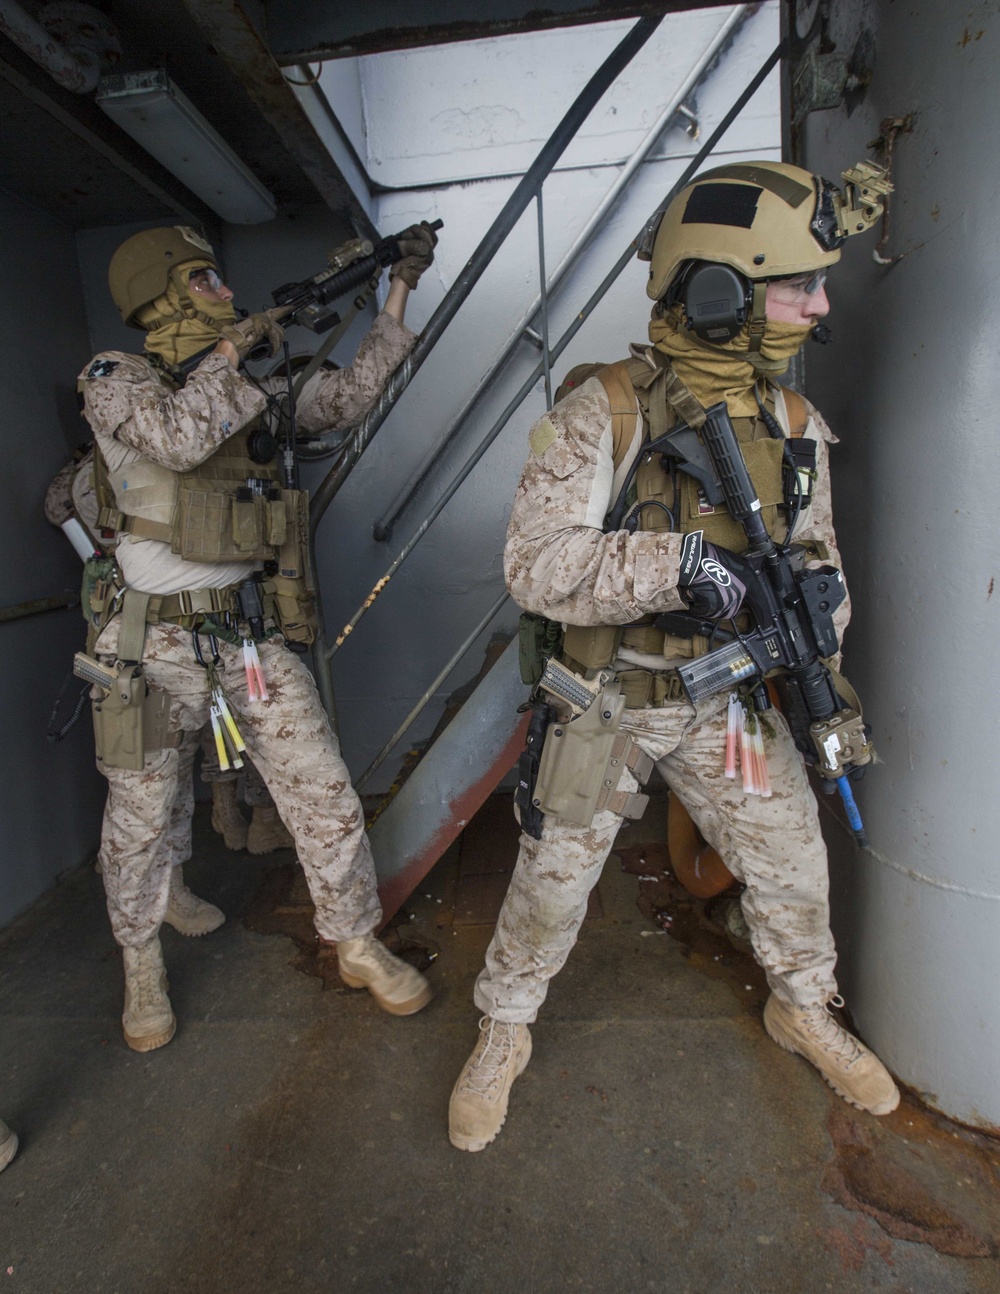 26th Marine Expeditonary Unit Force Recon Marines conduct VBSS training in Souda Bay